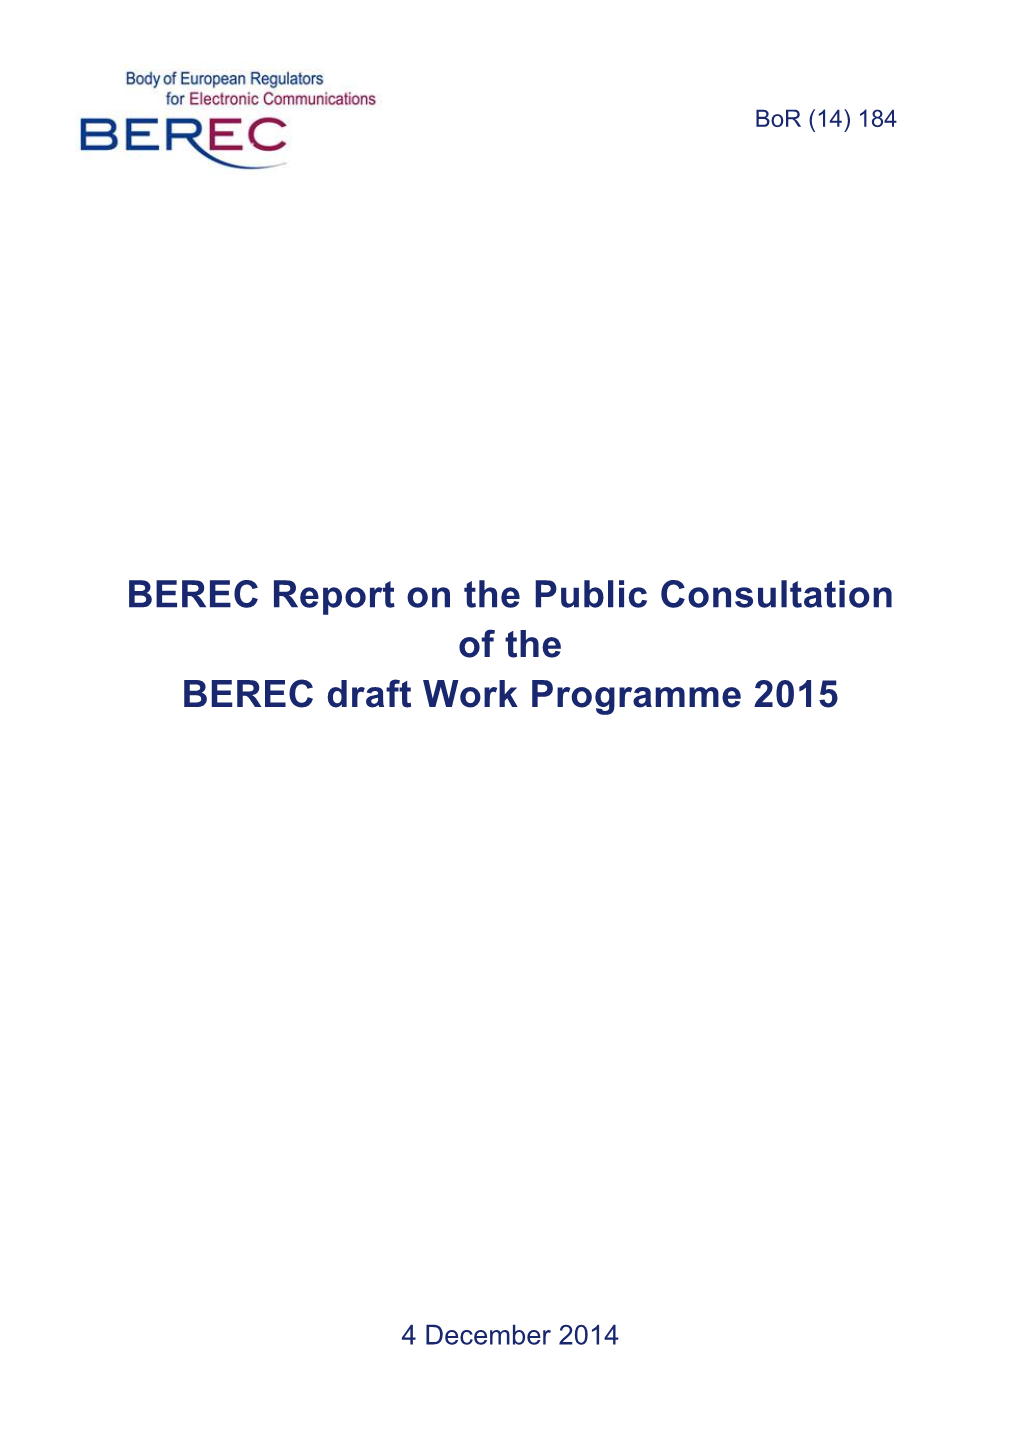 BEREC Report on the Public Consultation of the BEREC Draft Work Programme 2015